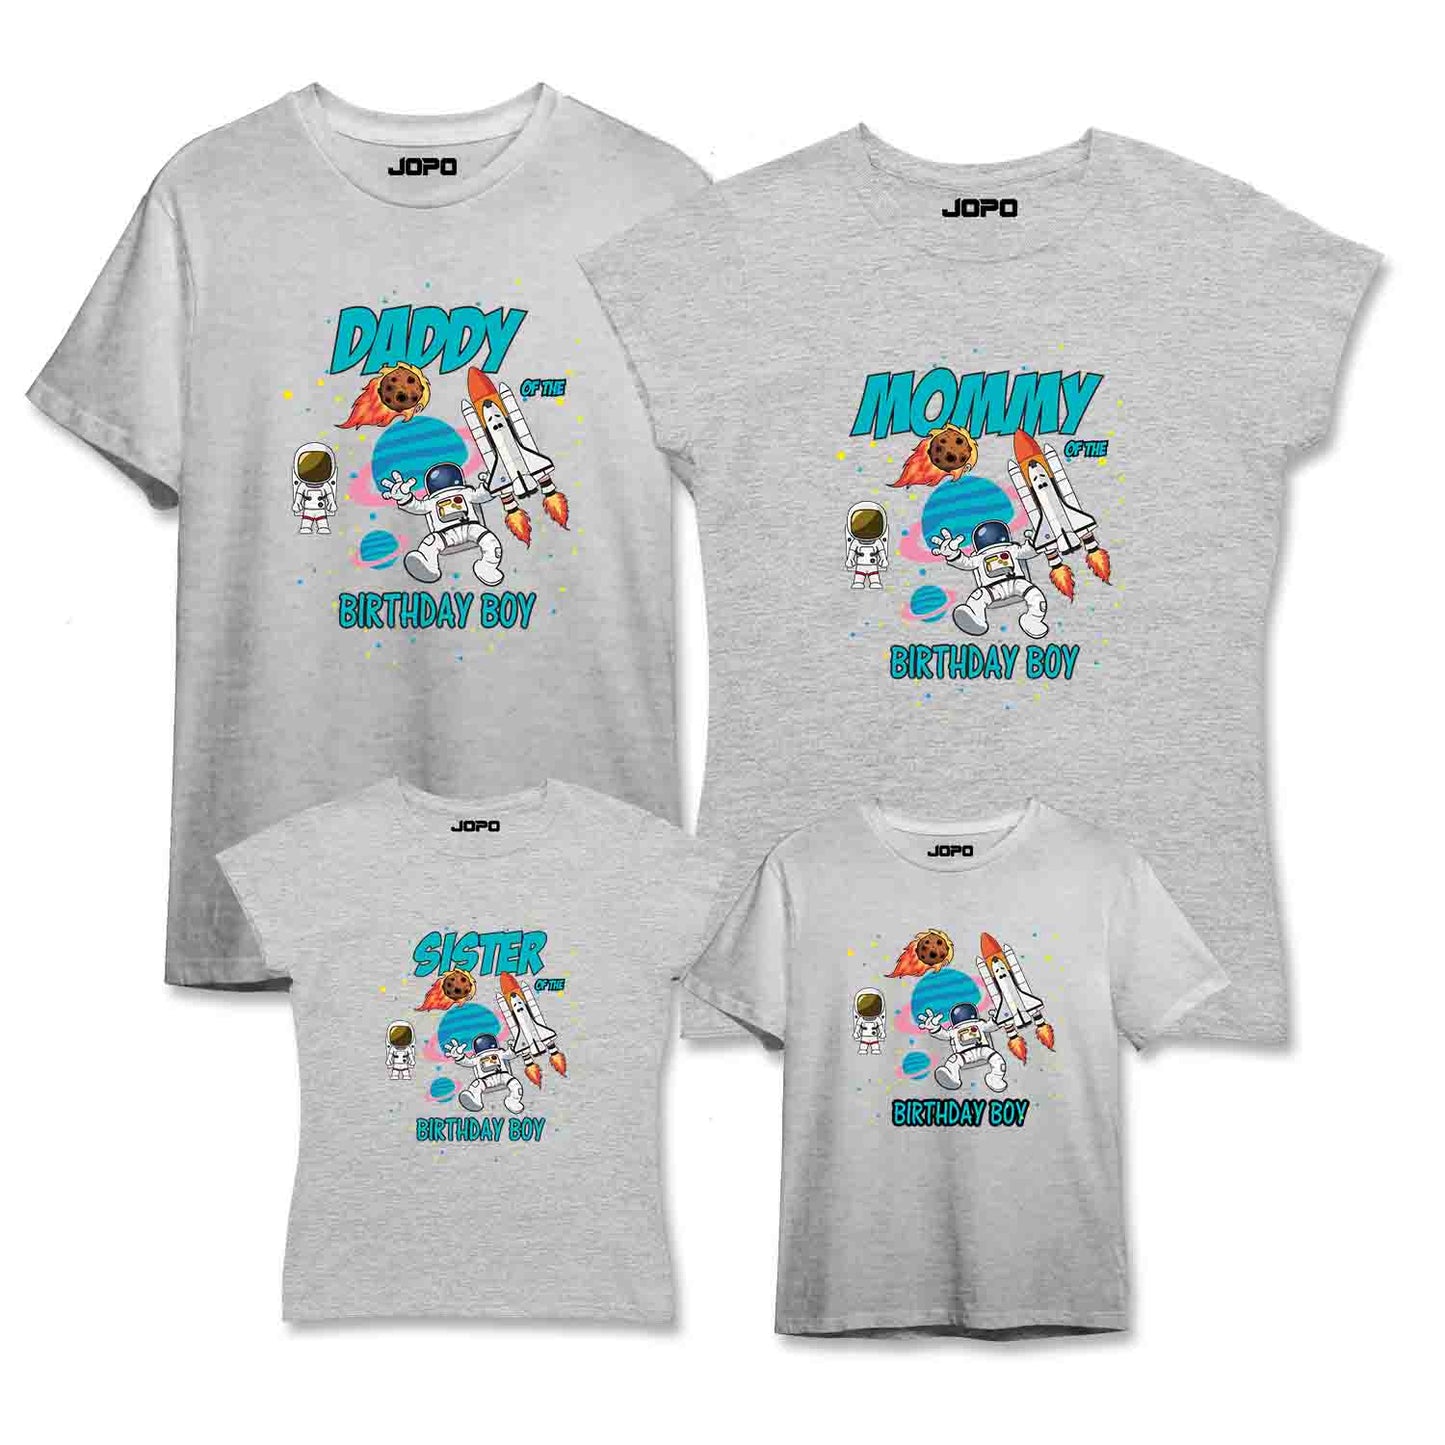 Space Theme Matching Family Tshirts for Birthday Boy